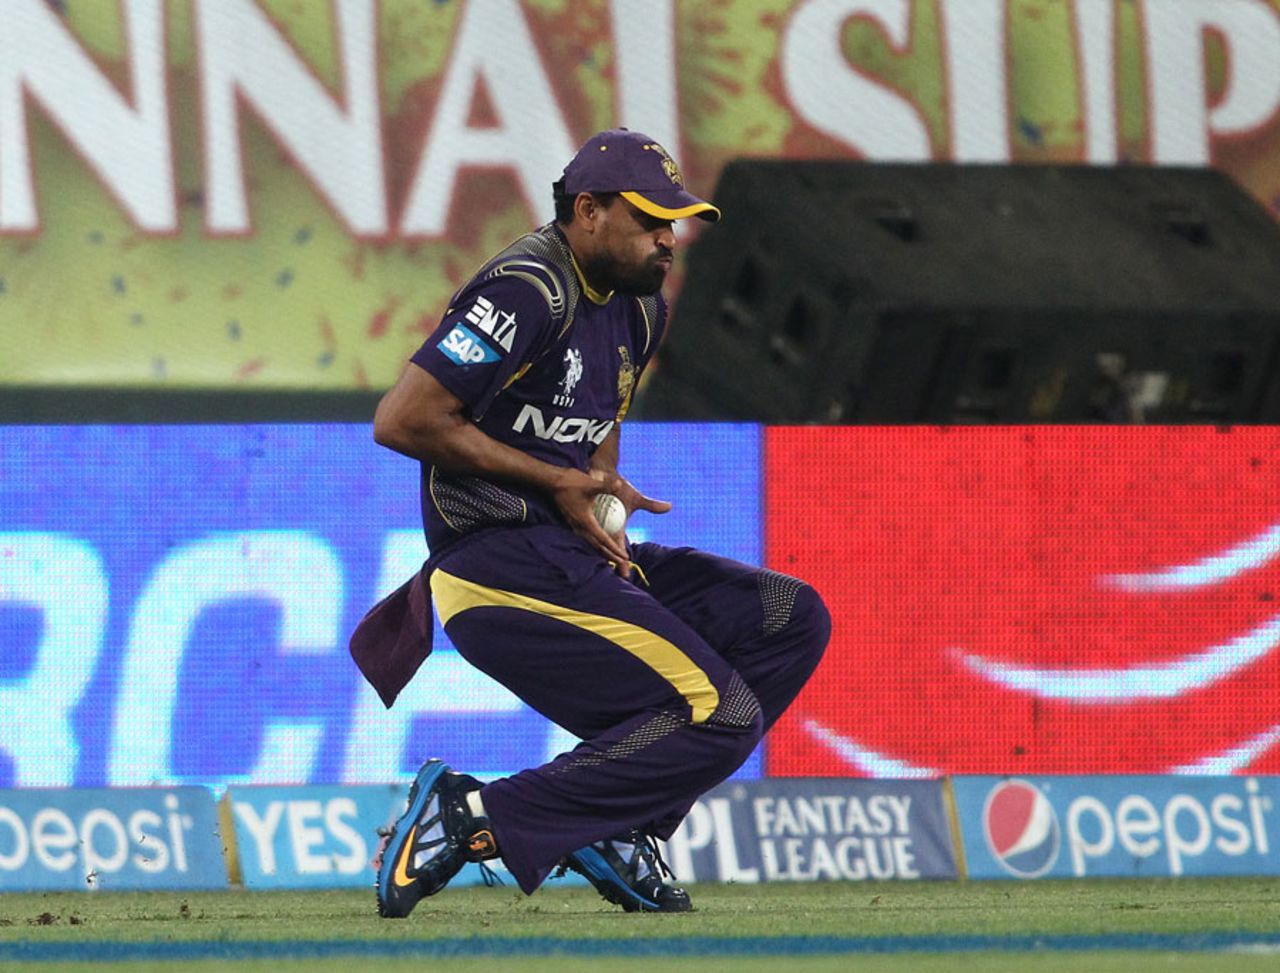 Yusuf Pathan takes the catch to dismiss Brendon McCullum, Chennai Super Kings v Kolkata Knight Riders, IPL 2014, Ranchi, May 2, 2014